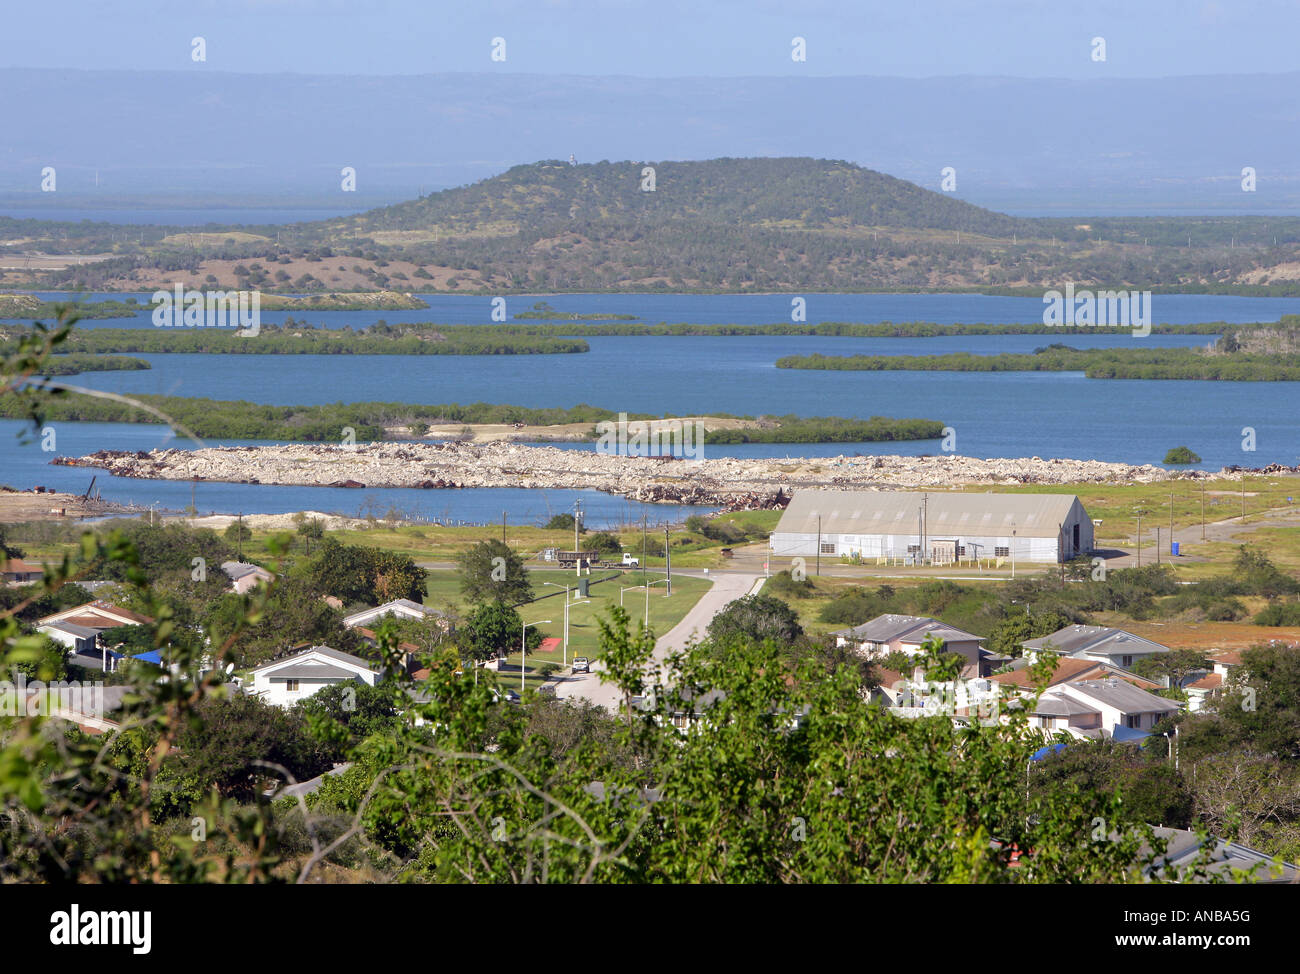 Naval station guantanamo bay cuba hi-res stock photography and images -  Alamy